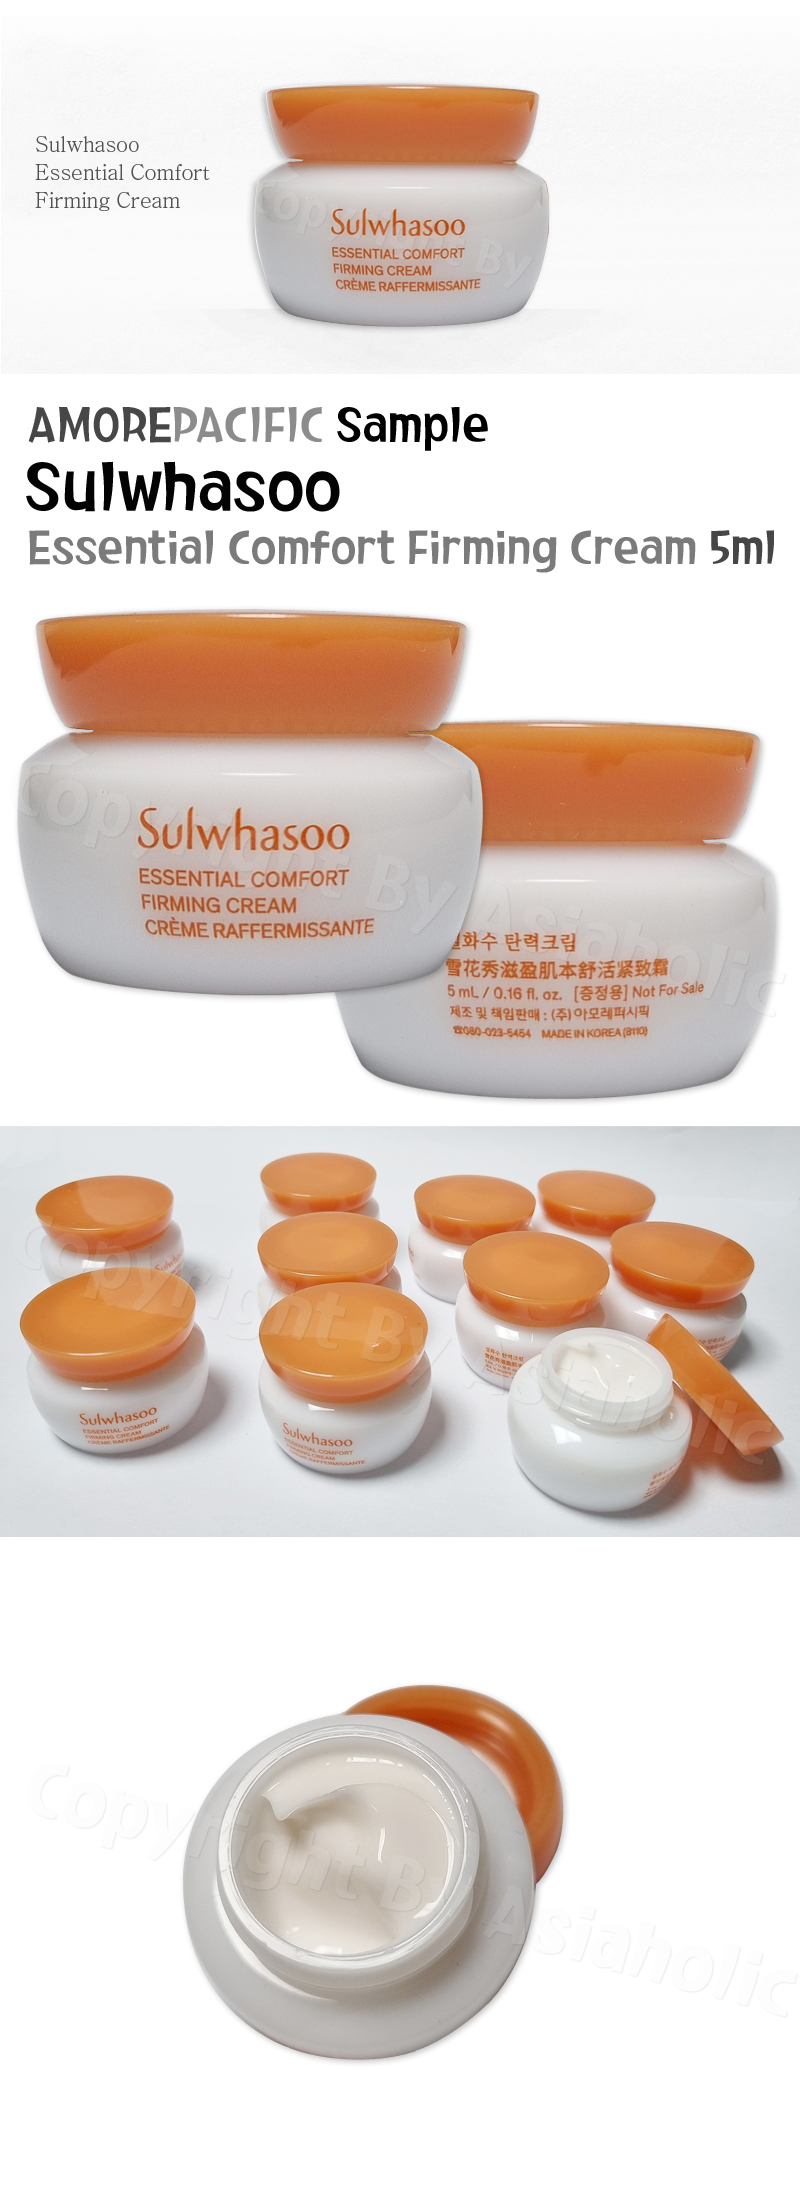 Sulwhasoo Essential Comfort Firming Cream 5ml x 10pcs (50ml) Sample Newest Version